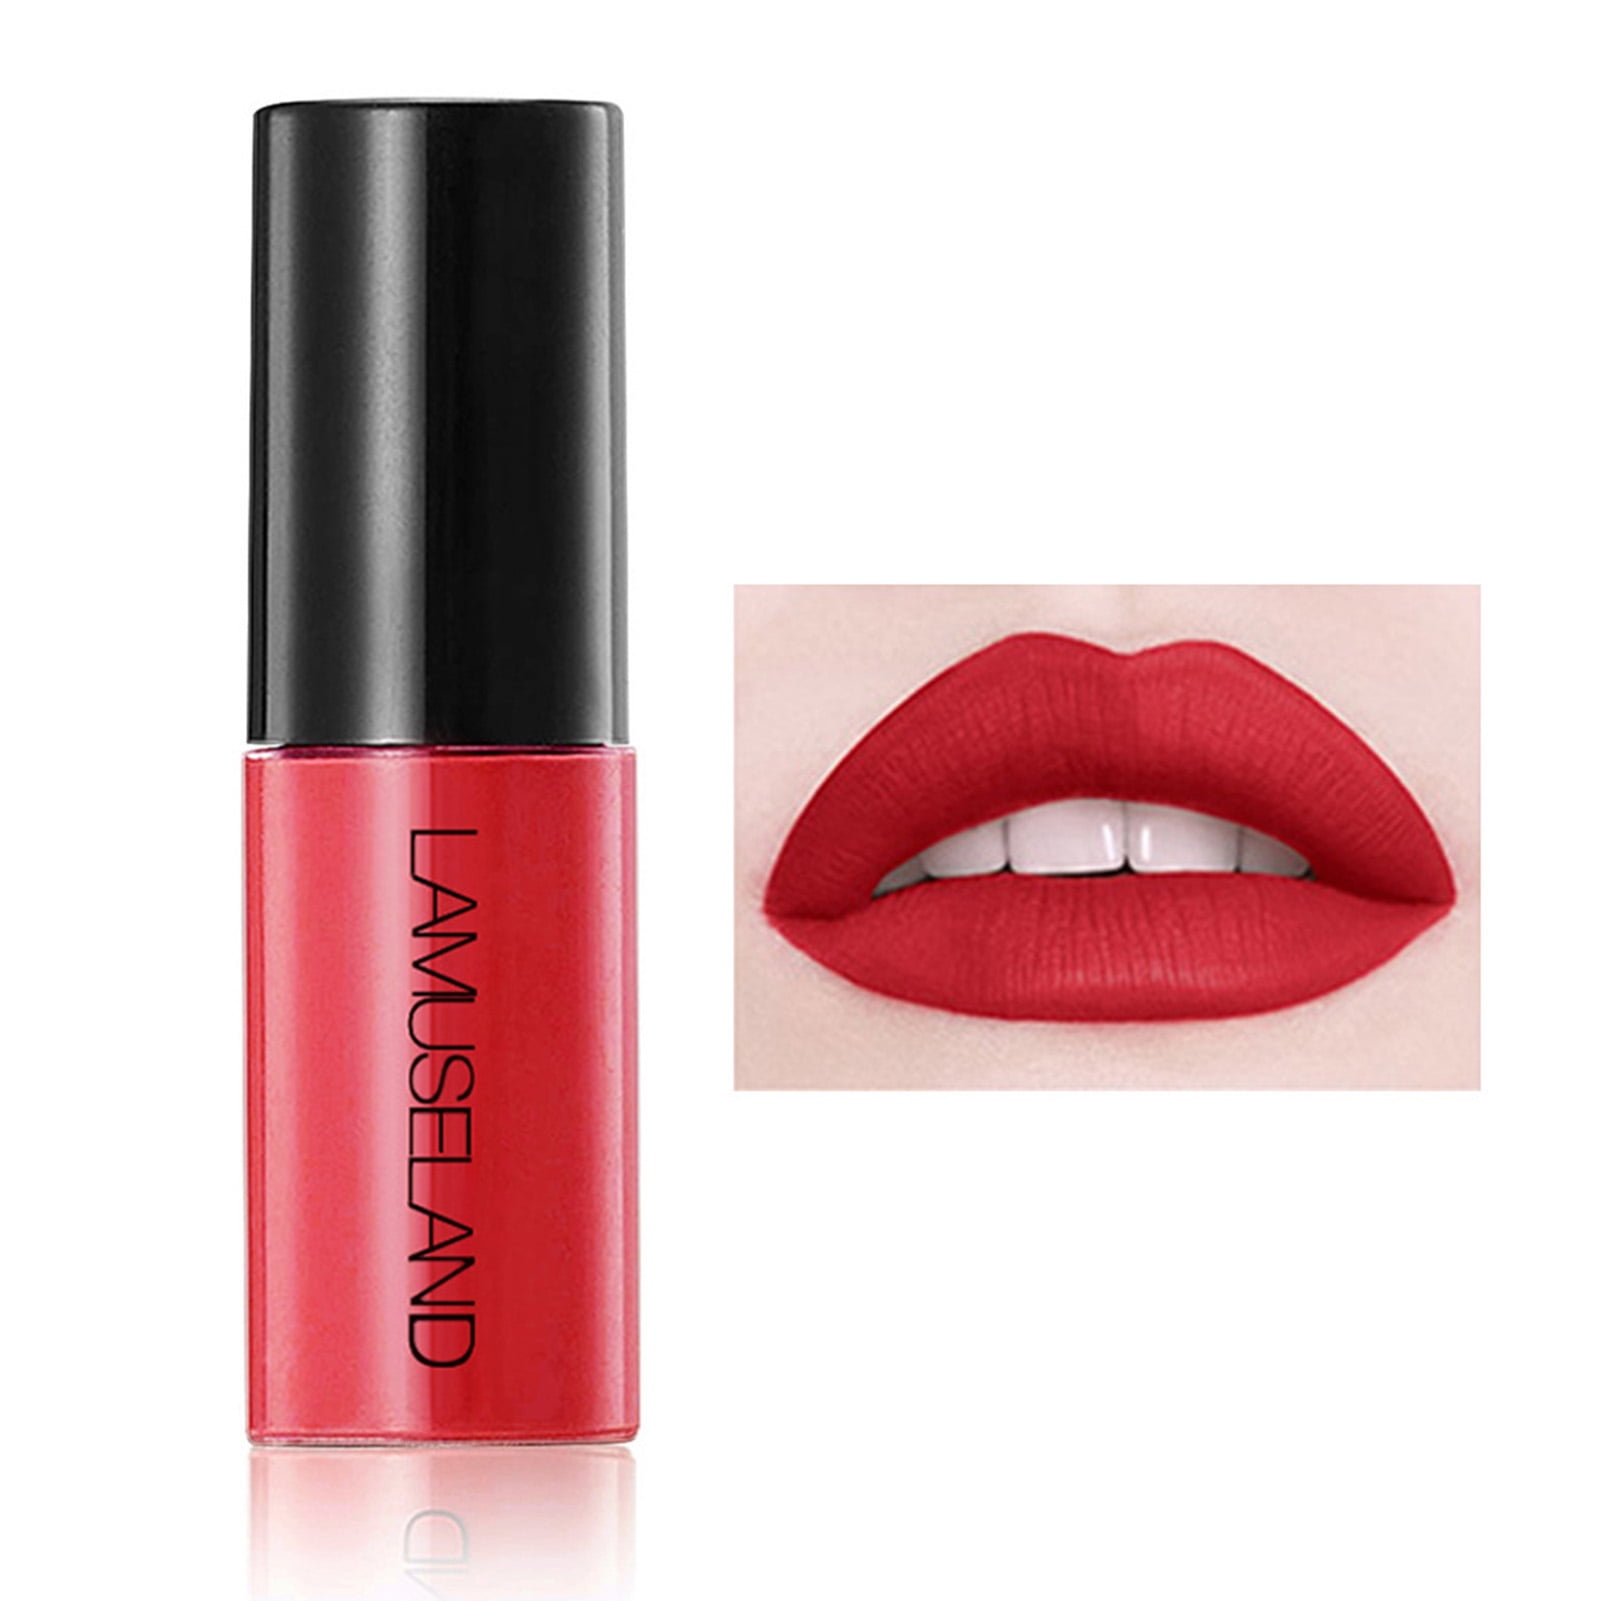 Mini for Bluethy Long-Lasting Makeup Lipstick Liquid Gloss Waterproof Liquid Matte Non-Stick Lipstick Natural Beauty 3.5g